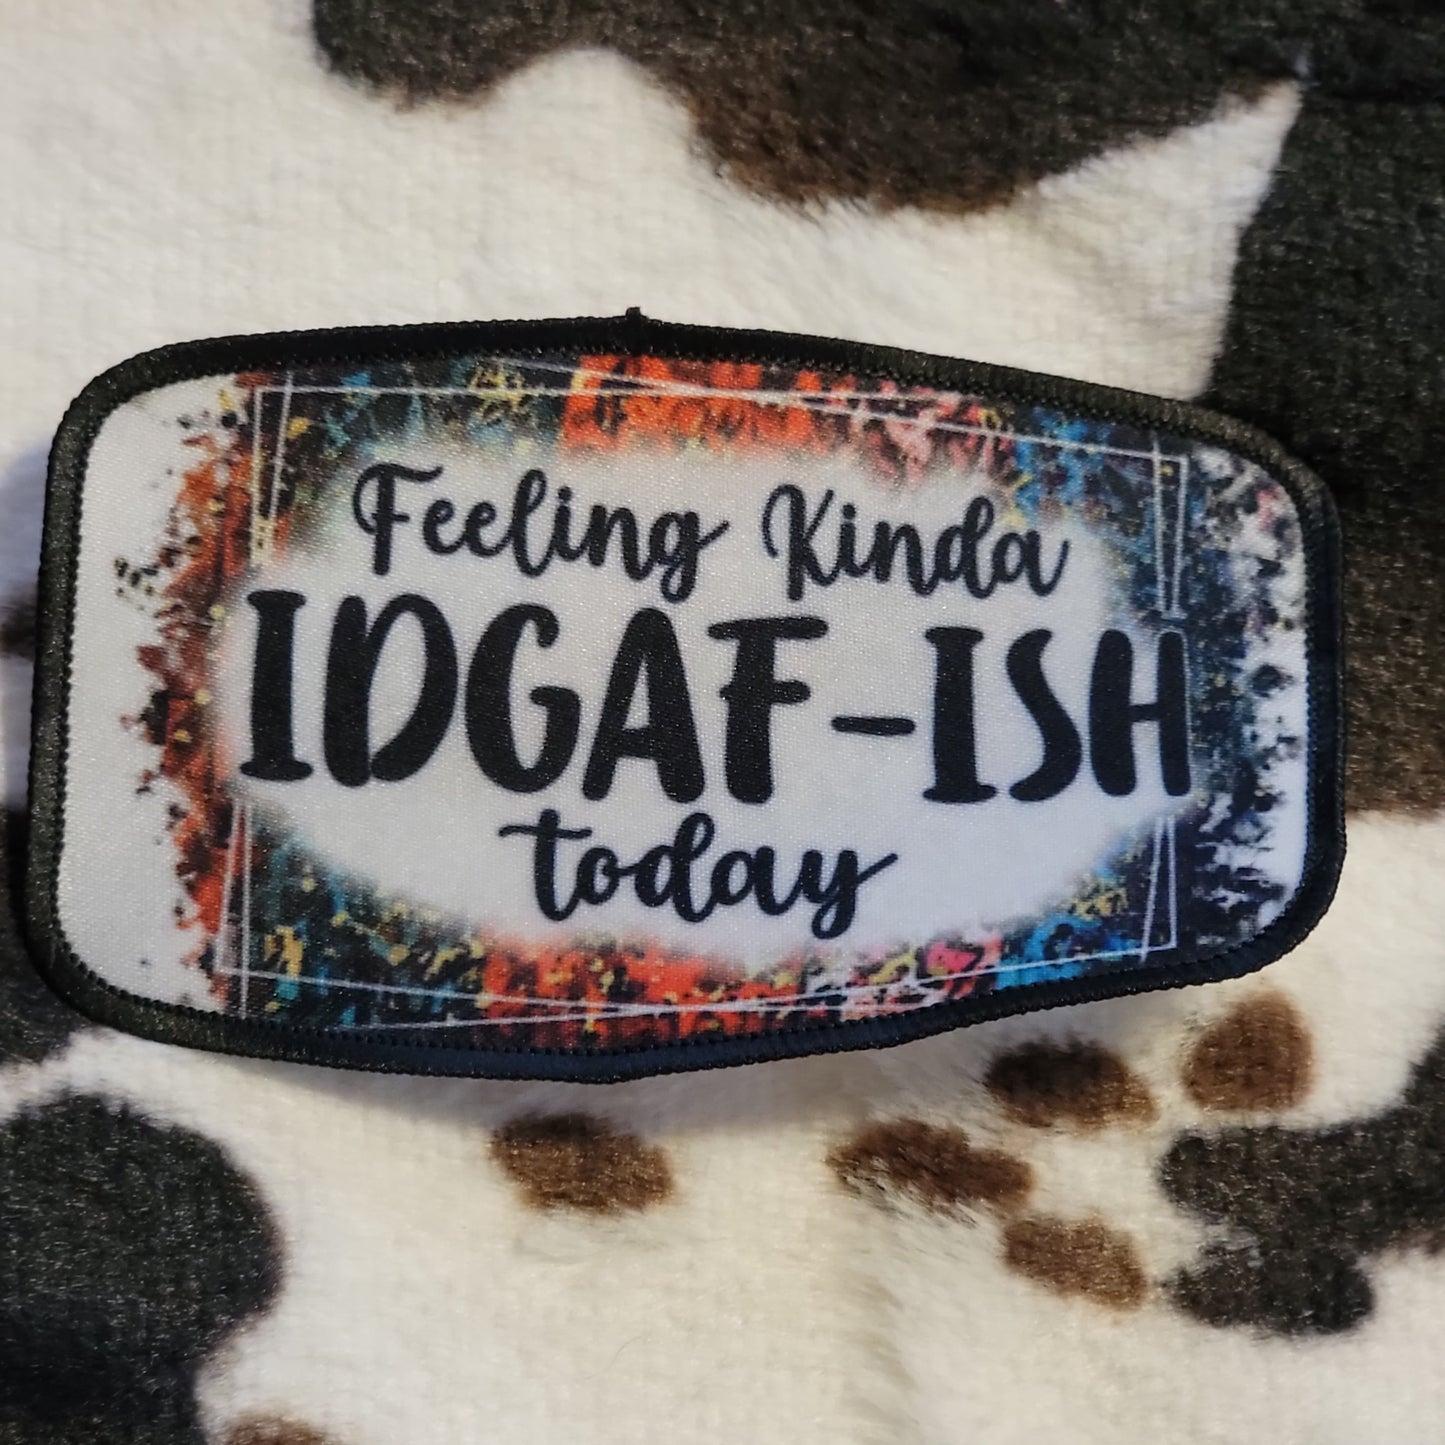 Feeling Idgaf-Ish Today Hat Patch